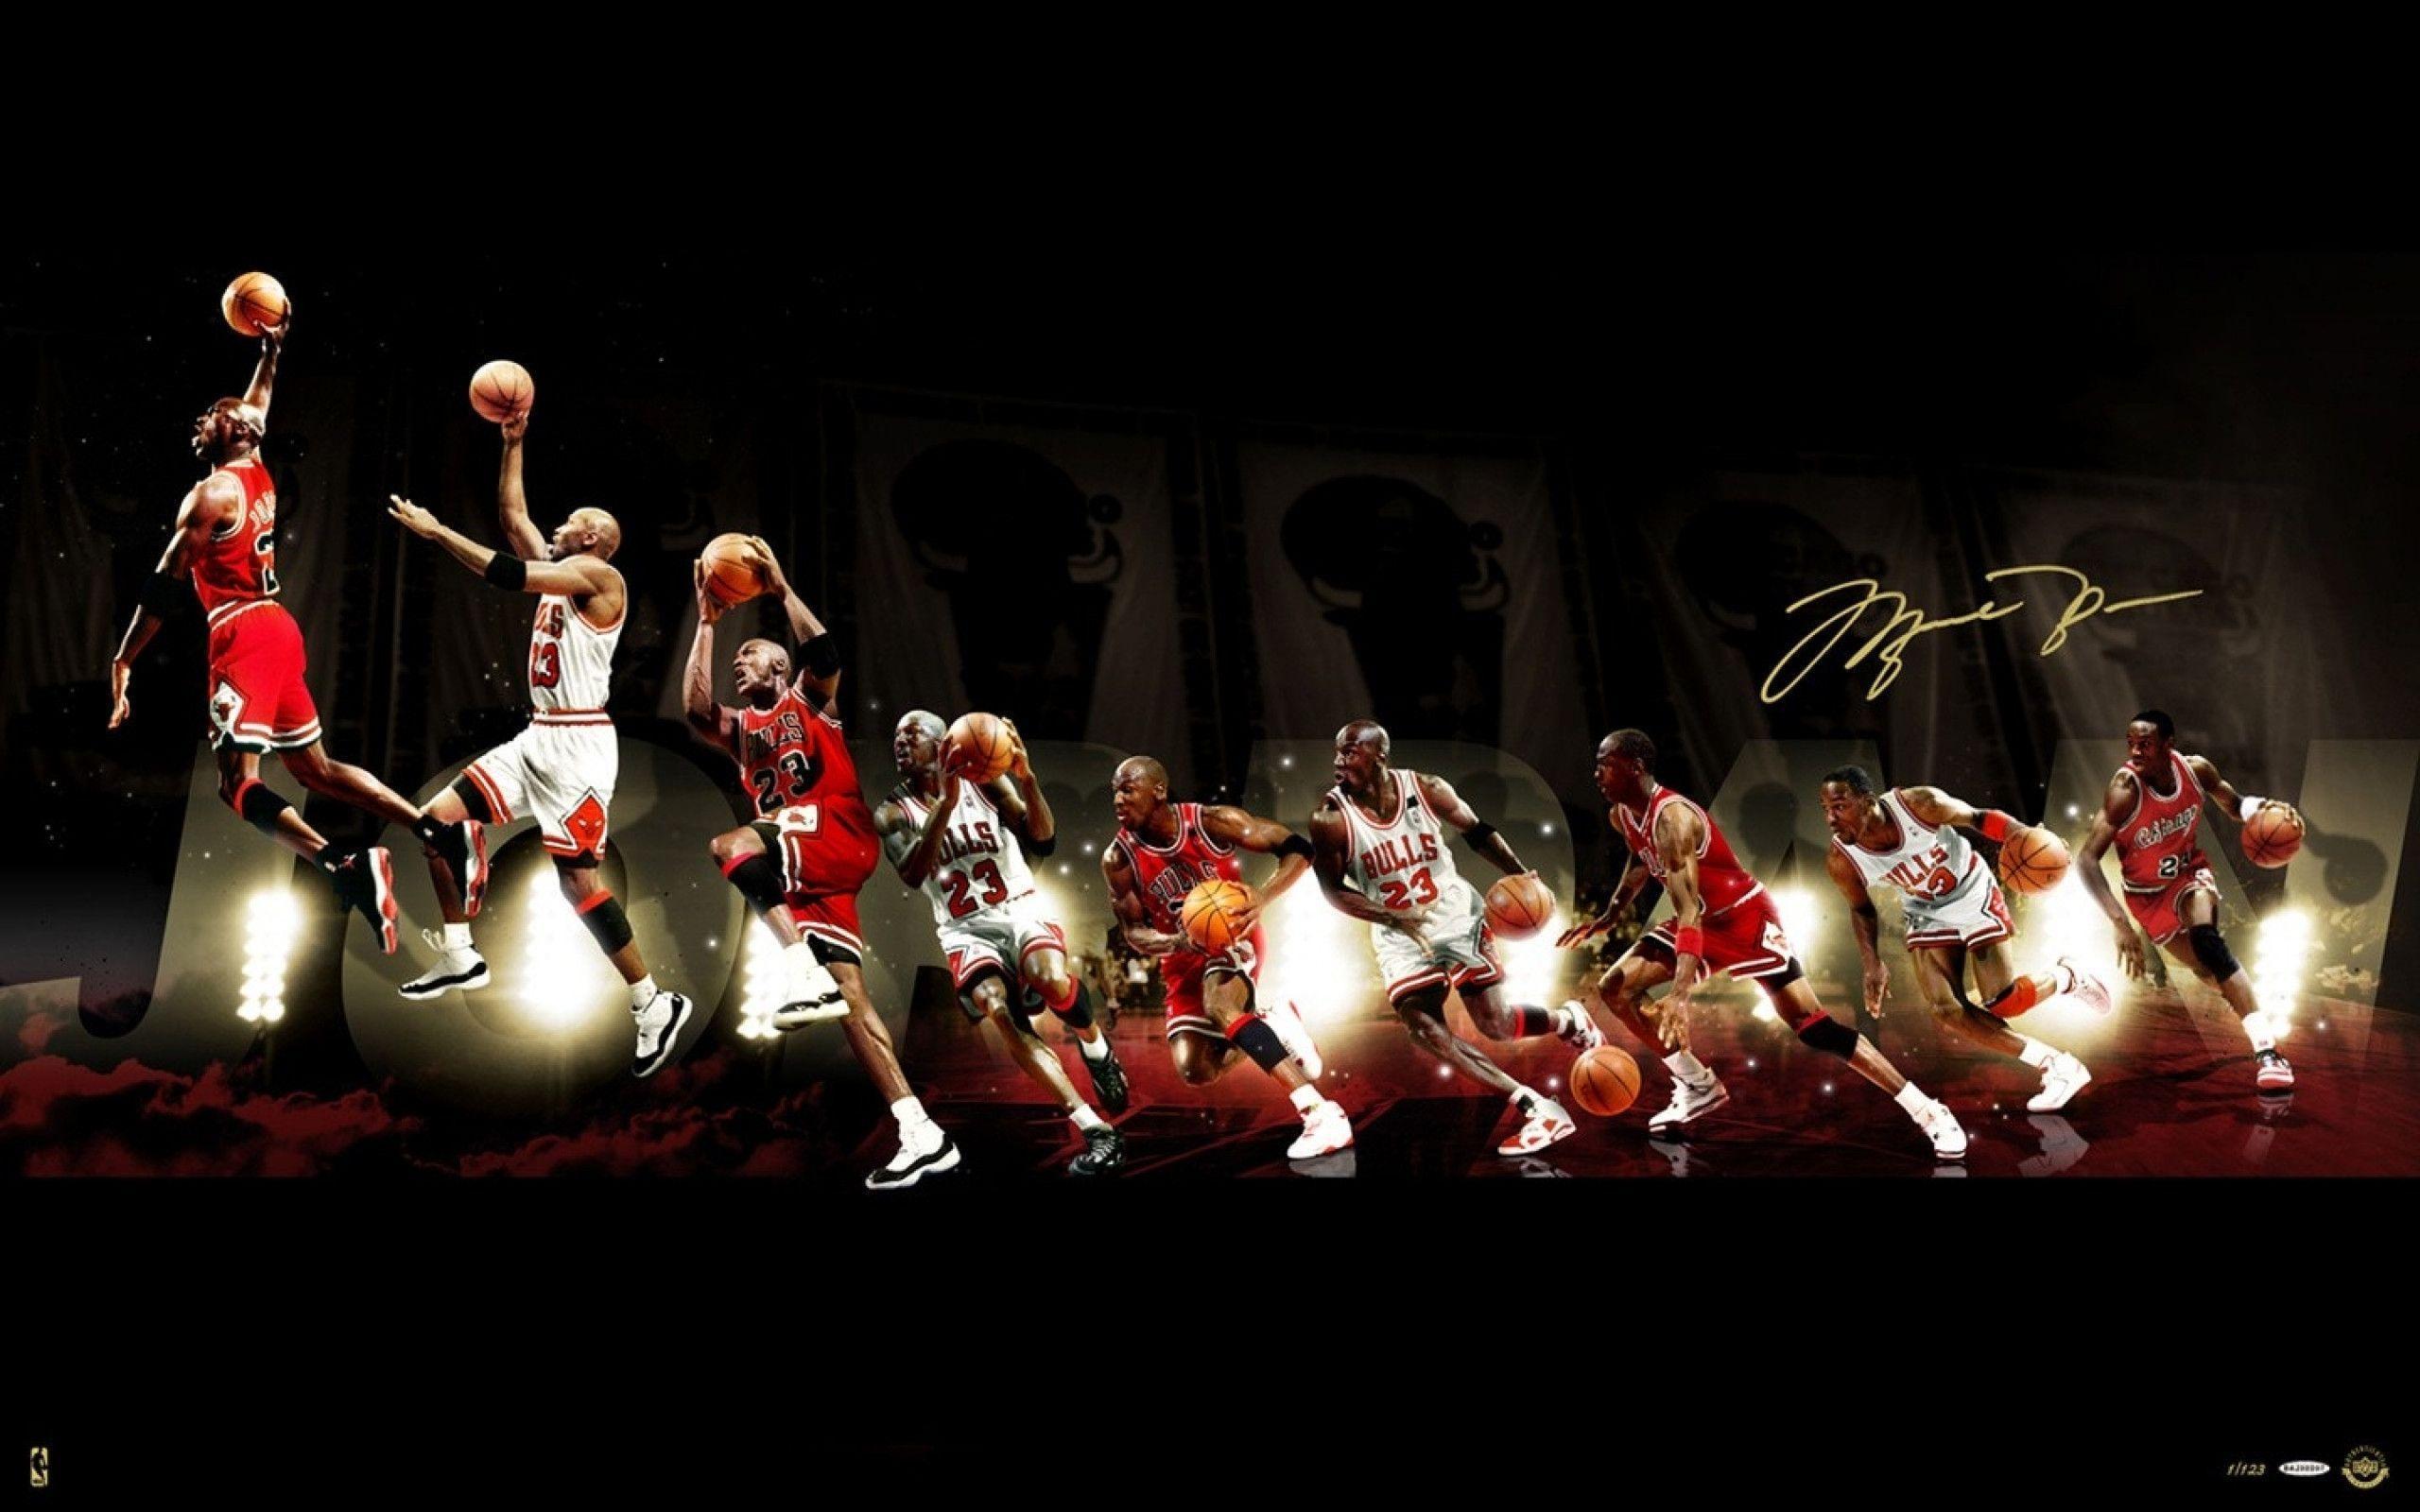 Michael Jordan Wallpaper Dunk